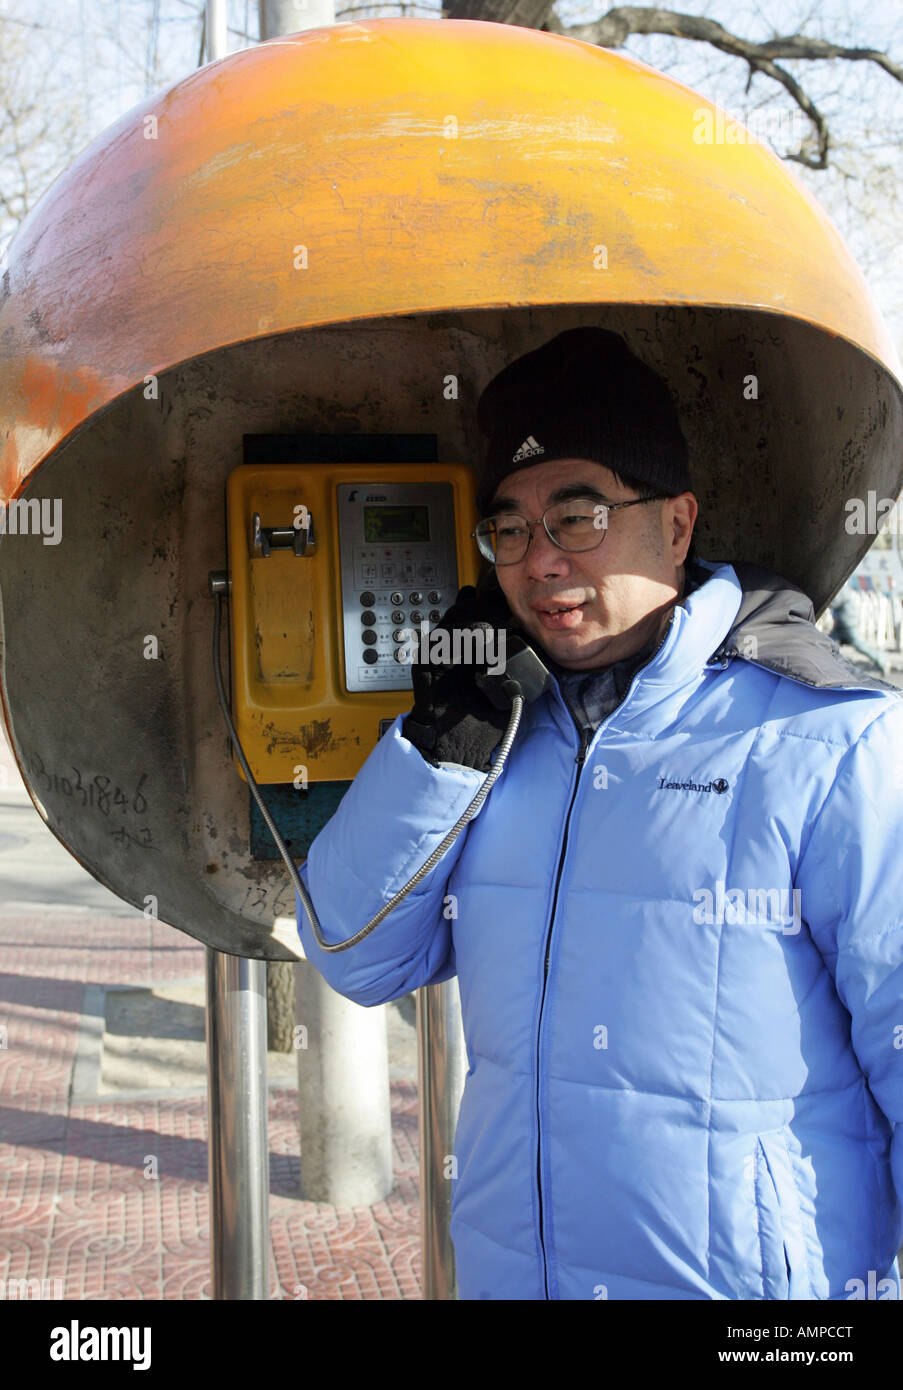 Man using a public telephone box, Beijing, China Stock Photo